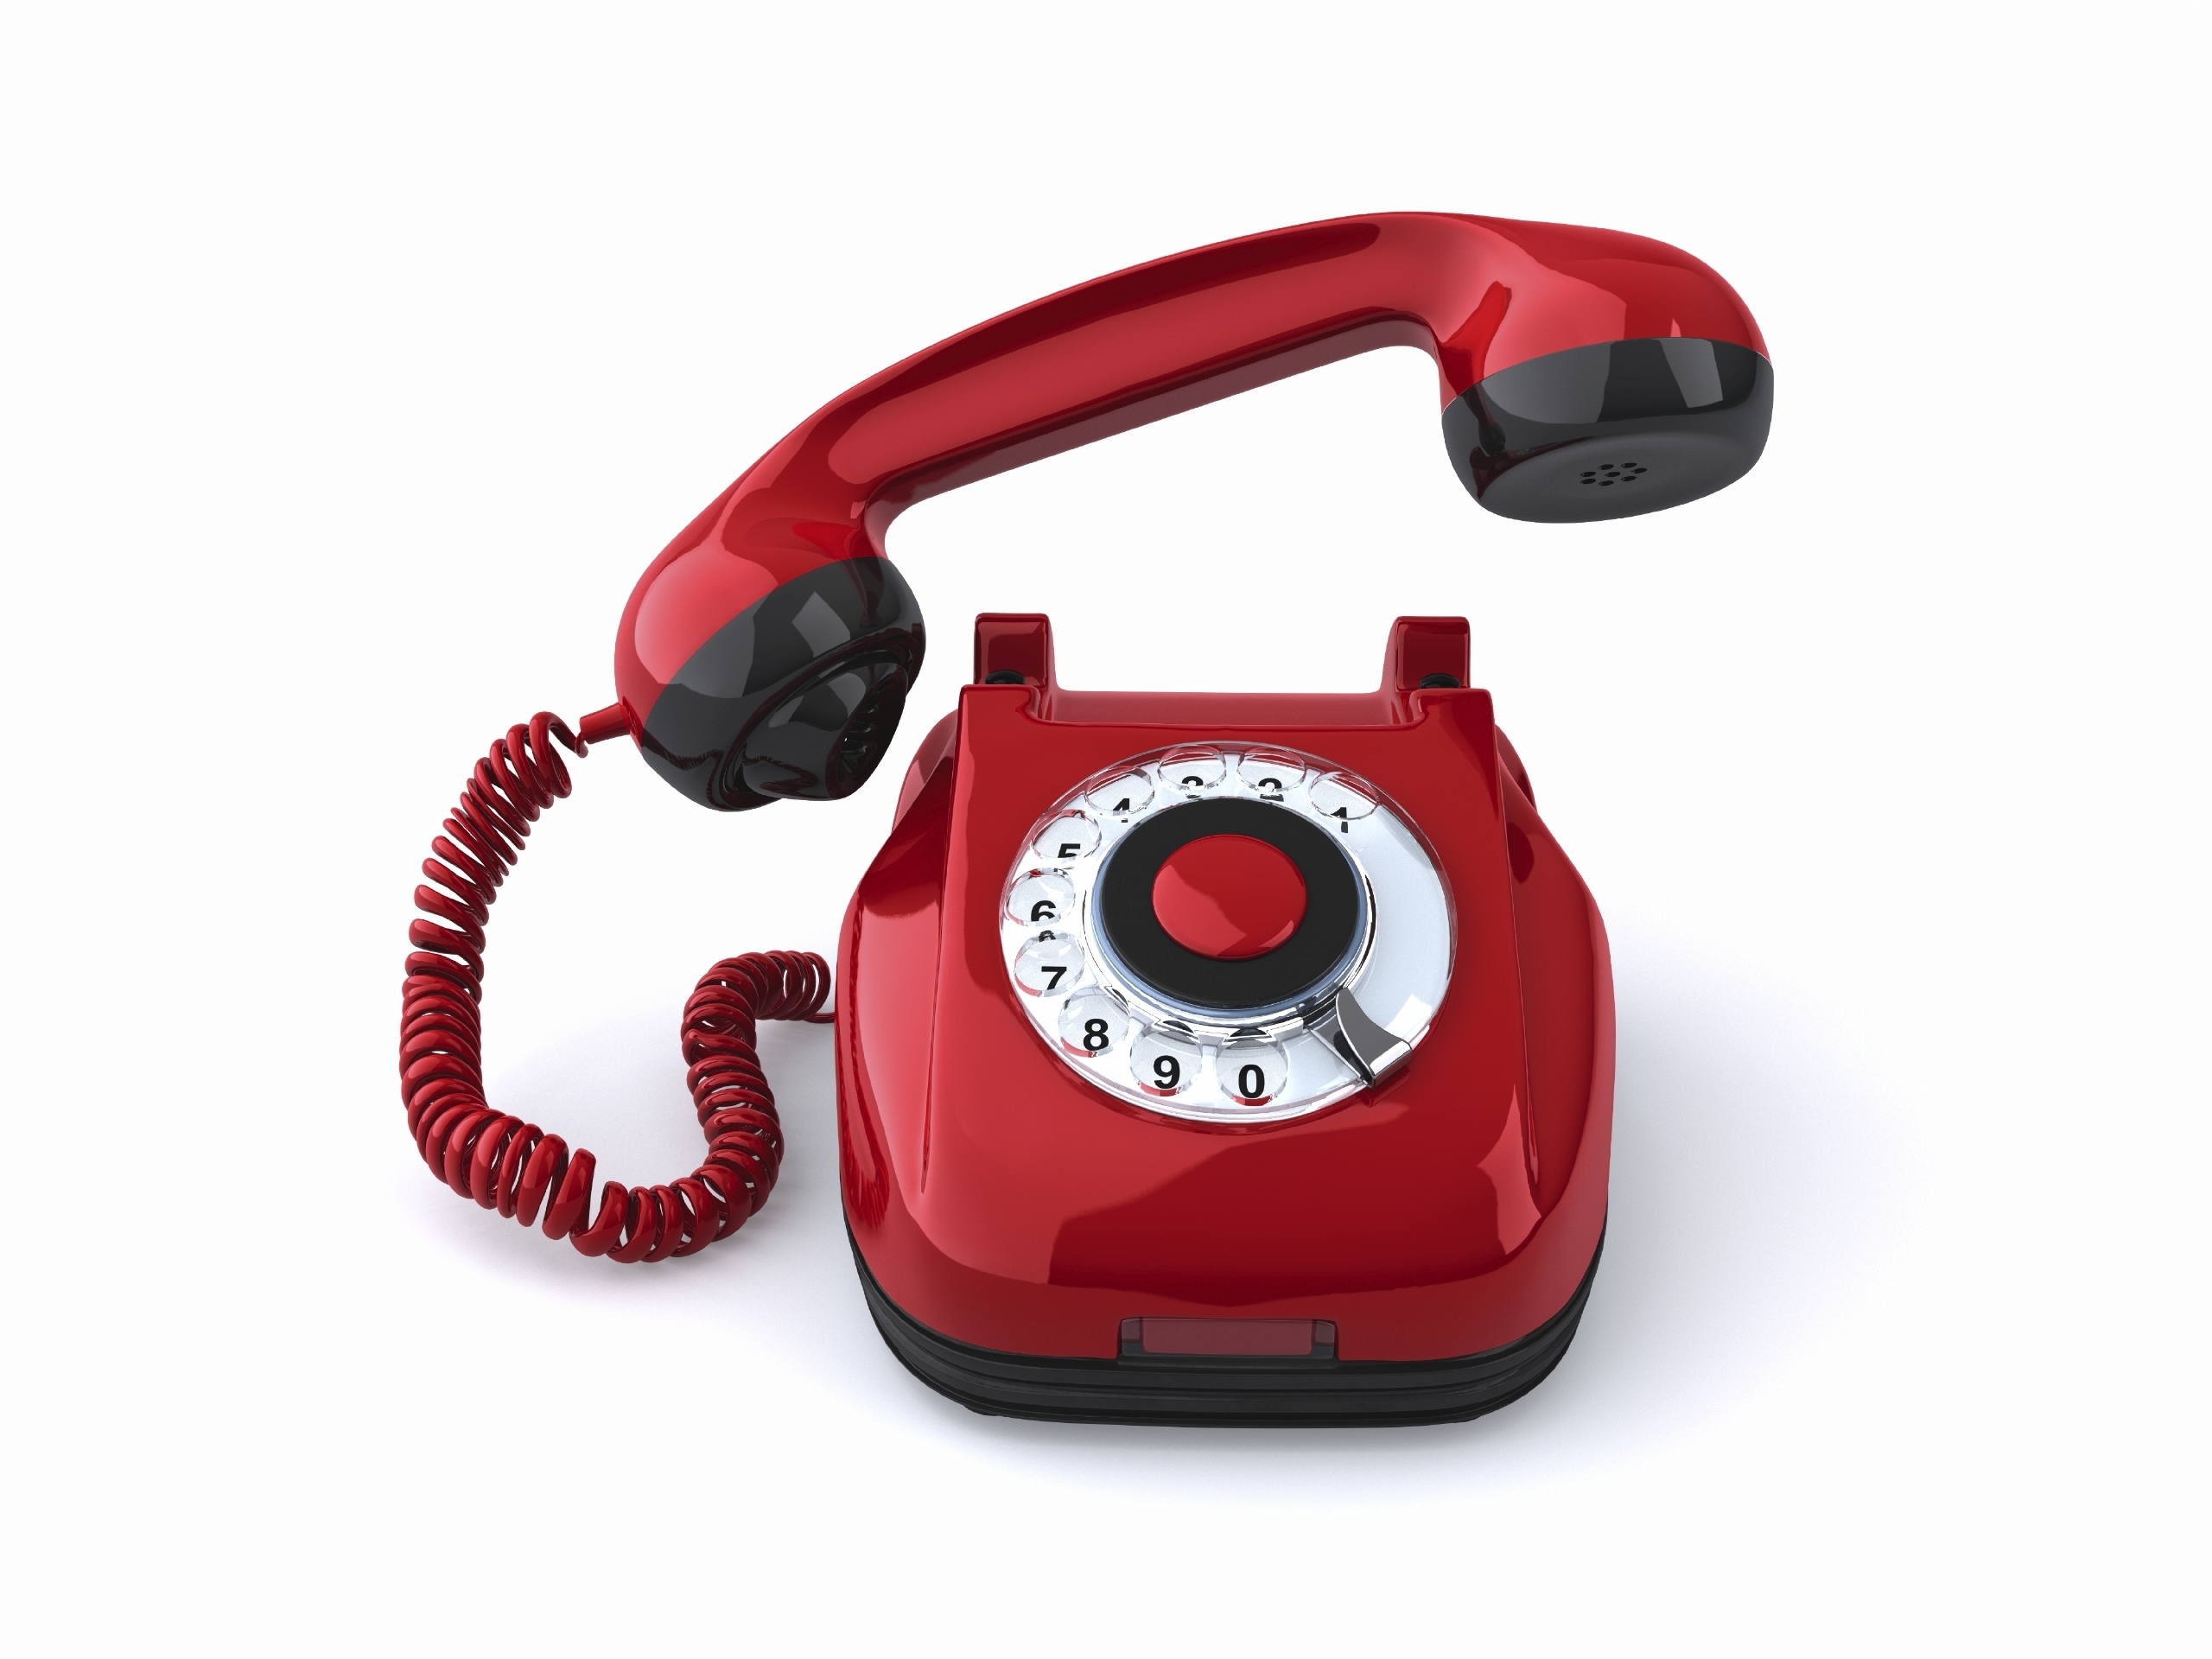 Телефон стал горячим. Красный телефон. Телефонный аппарат. Телефонный аппарат стационарный. Красный телефонный аппарат.